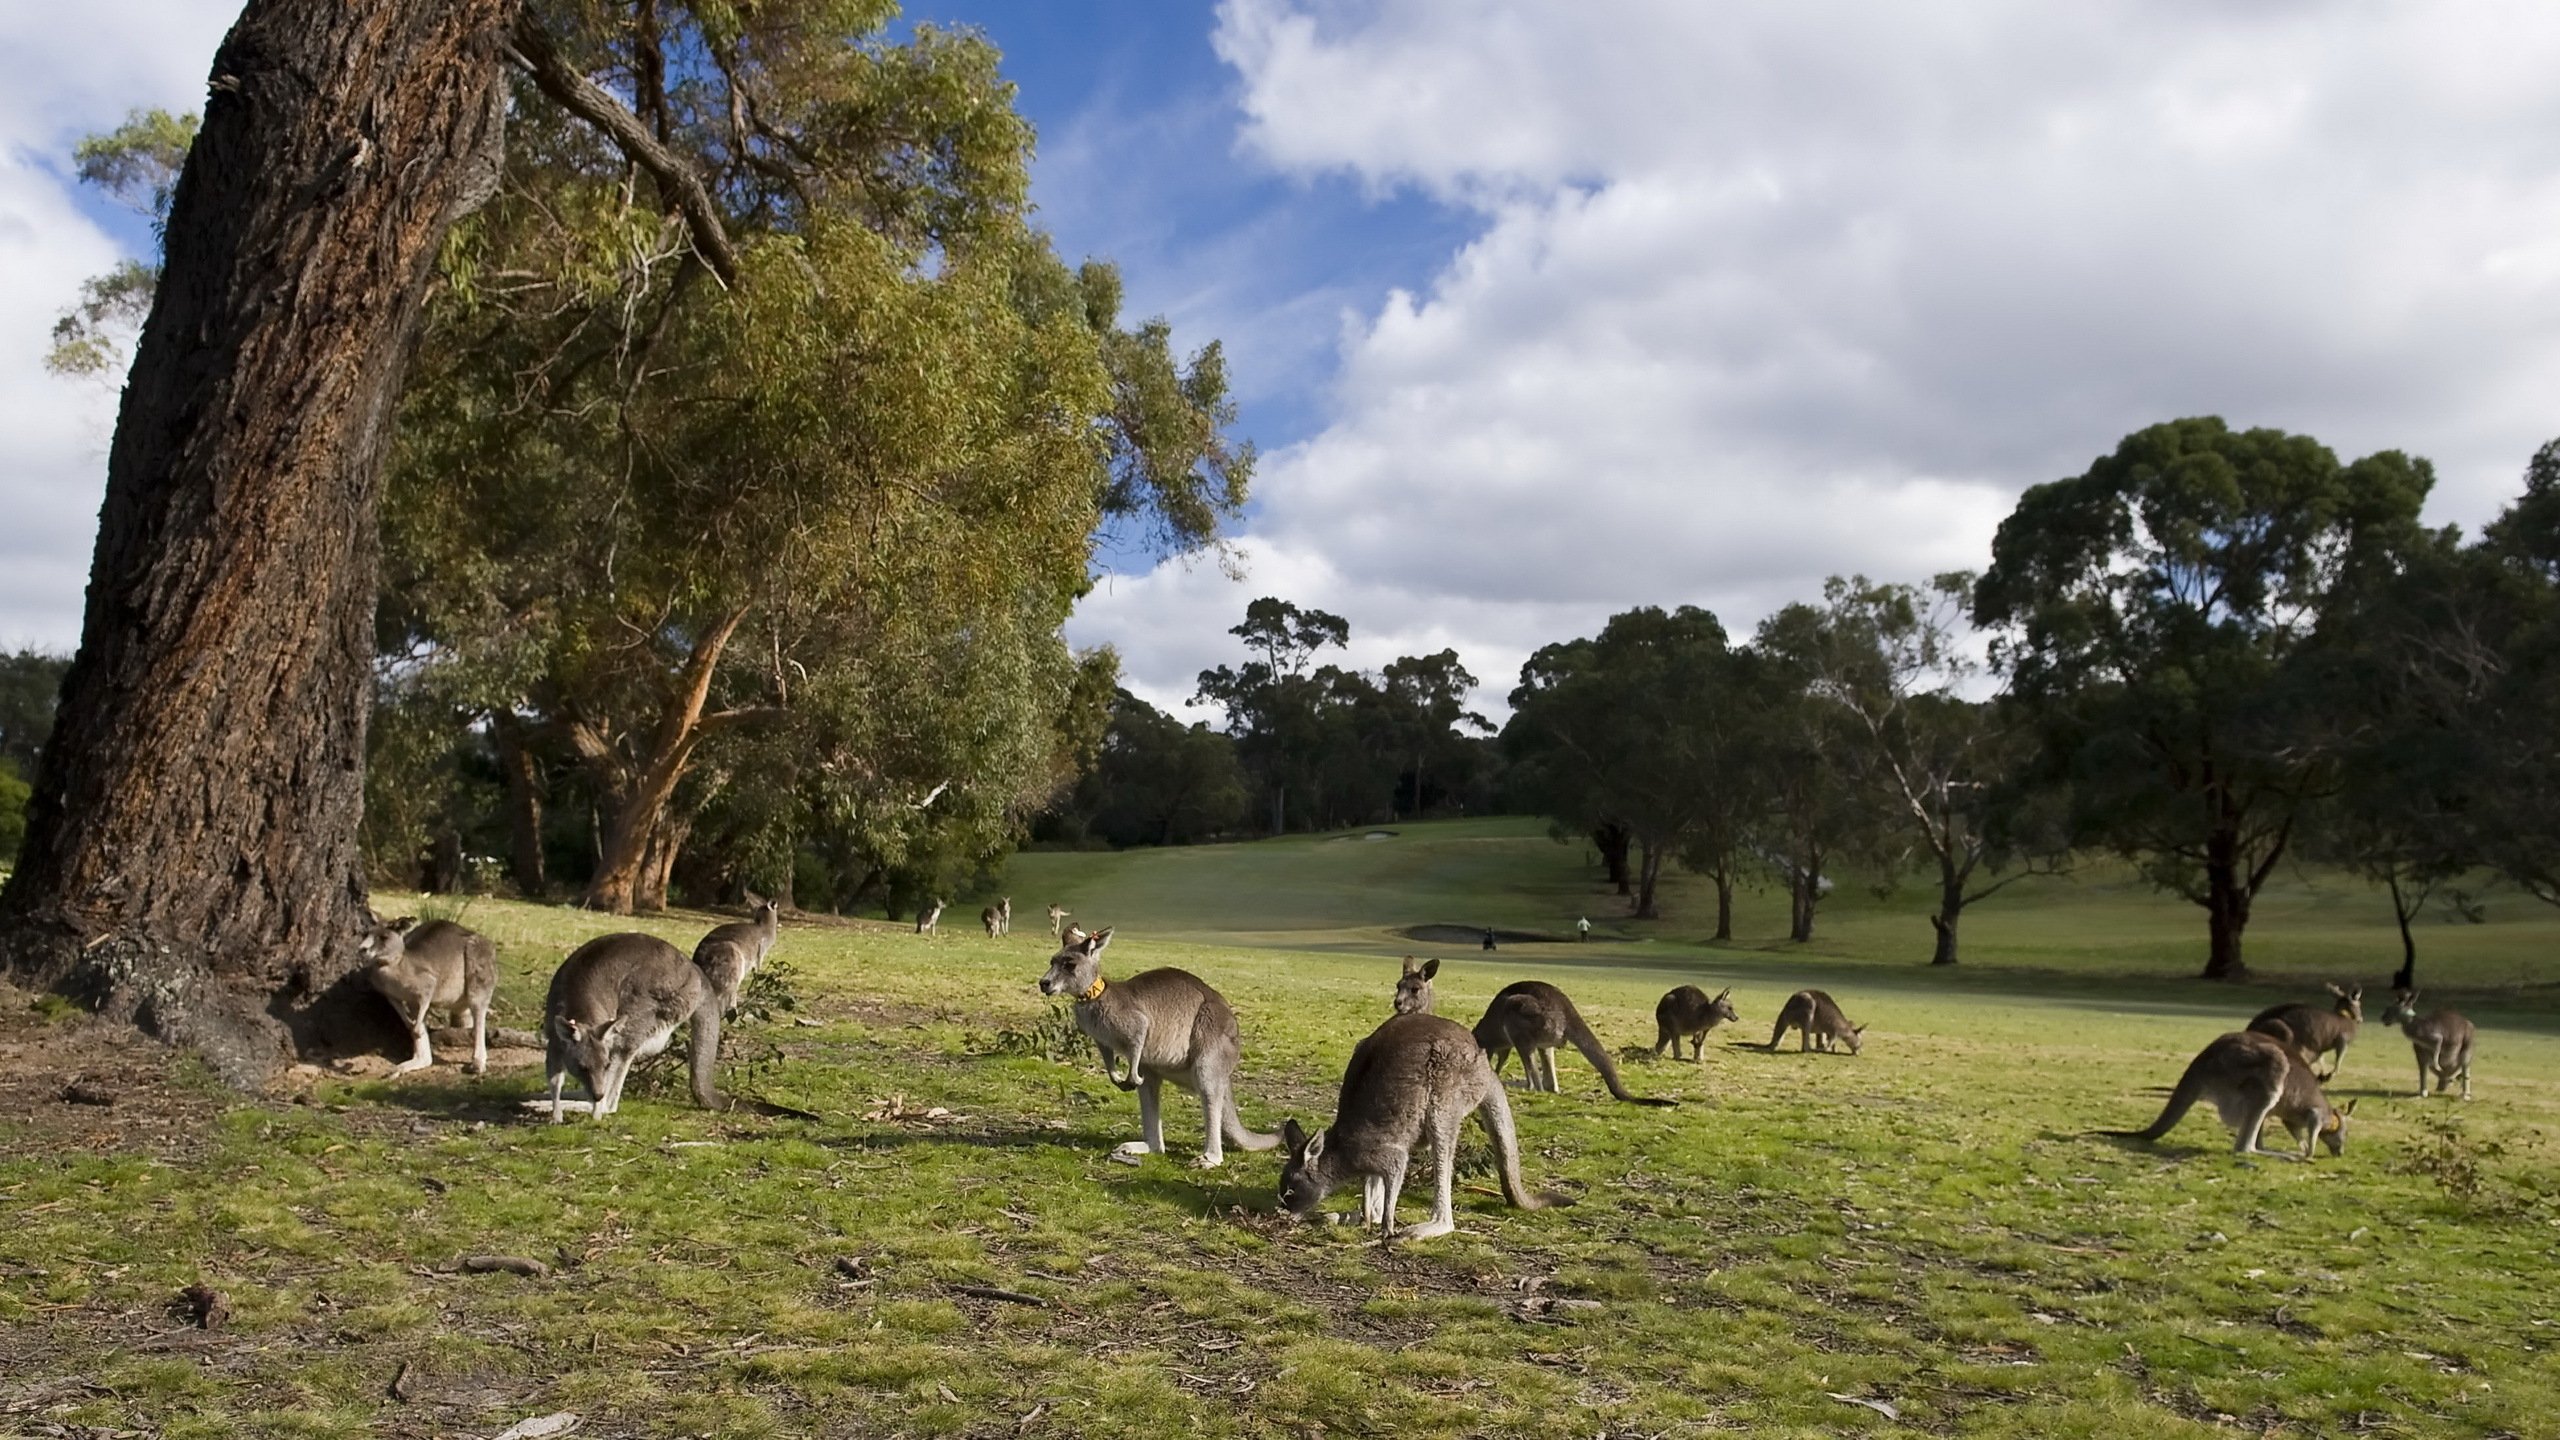 kangaroo, Marsupial Wallpaper